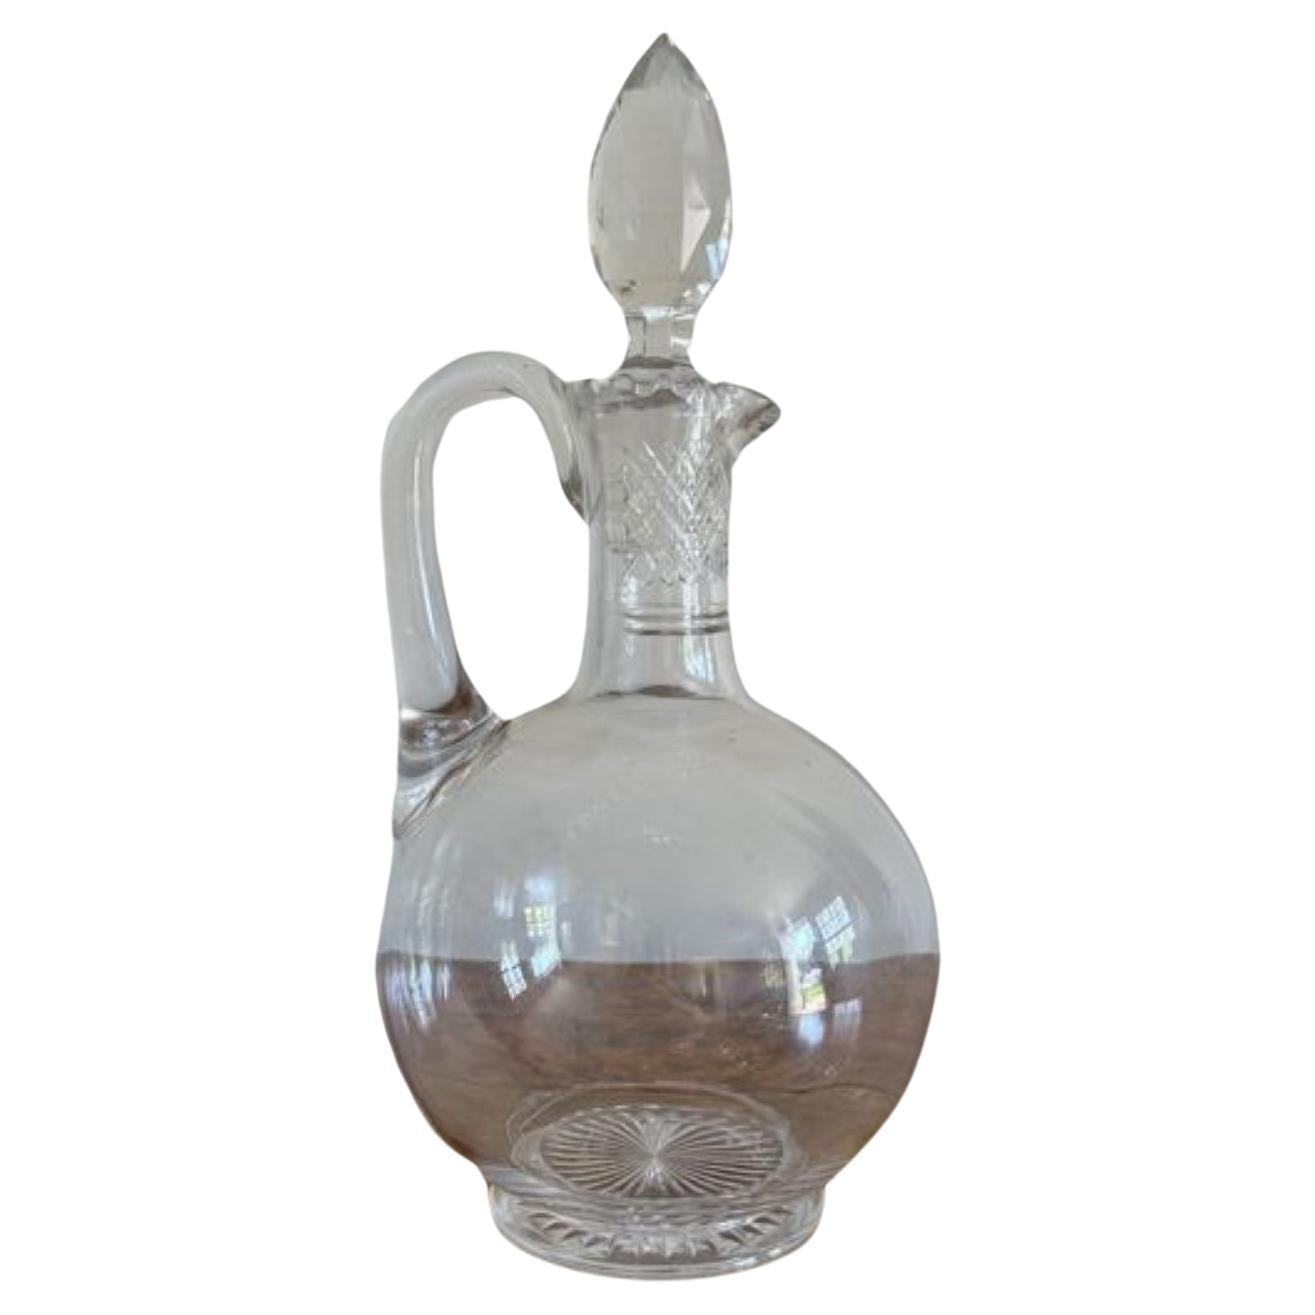 Quality antique Edwardian glass ewer 